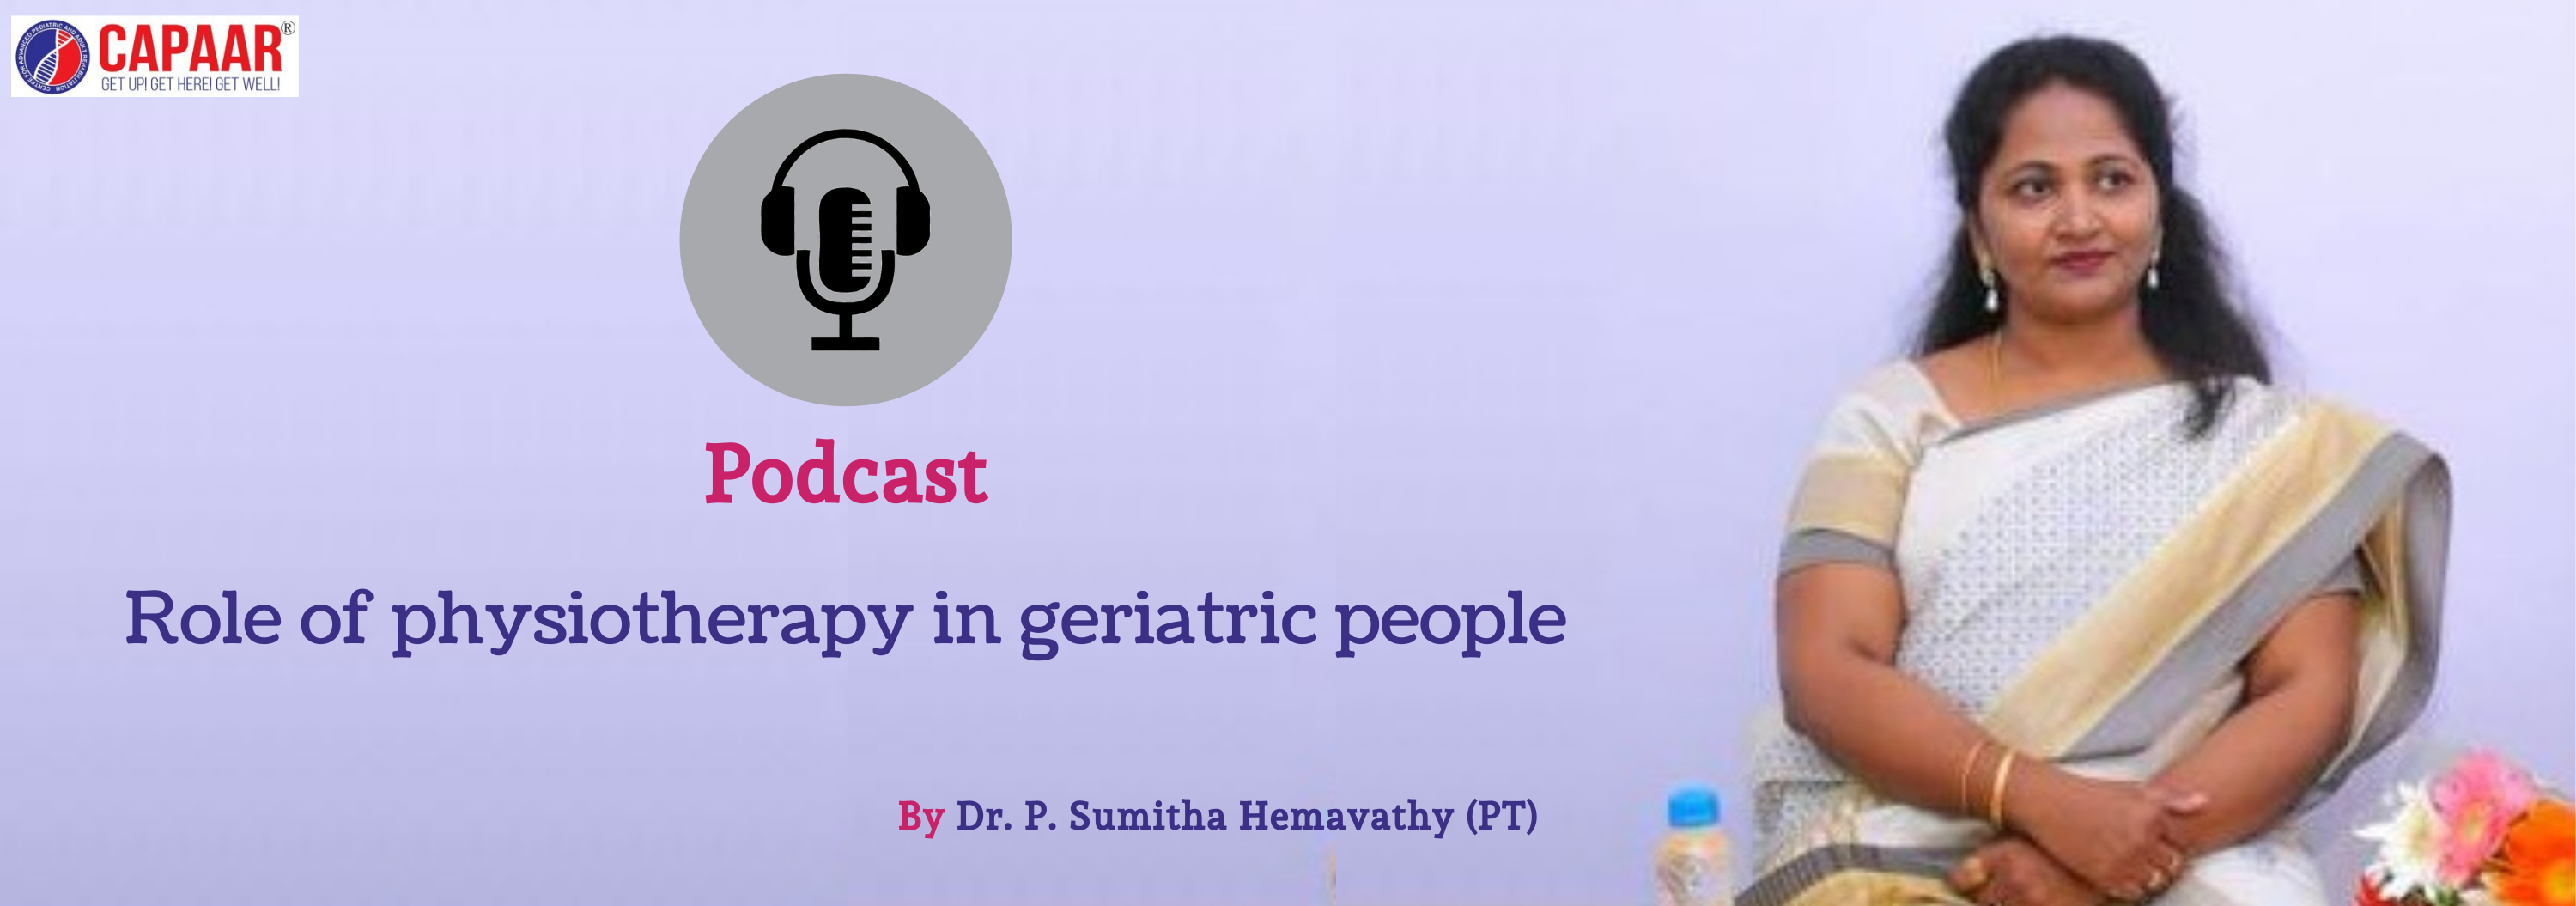 Podcast New Theme - Dr. P. Sumitha Hemavathy (PT)